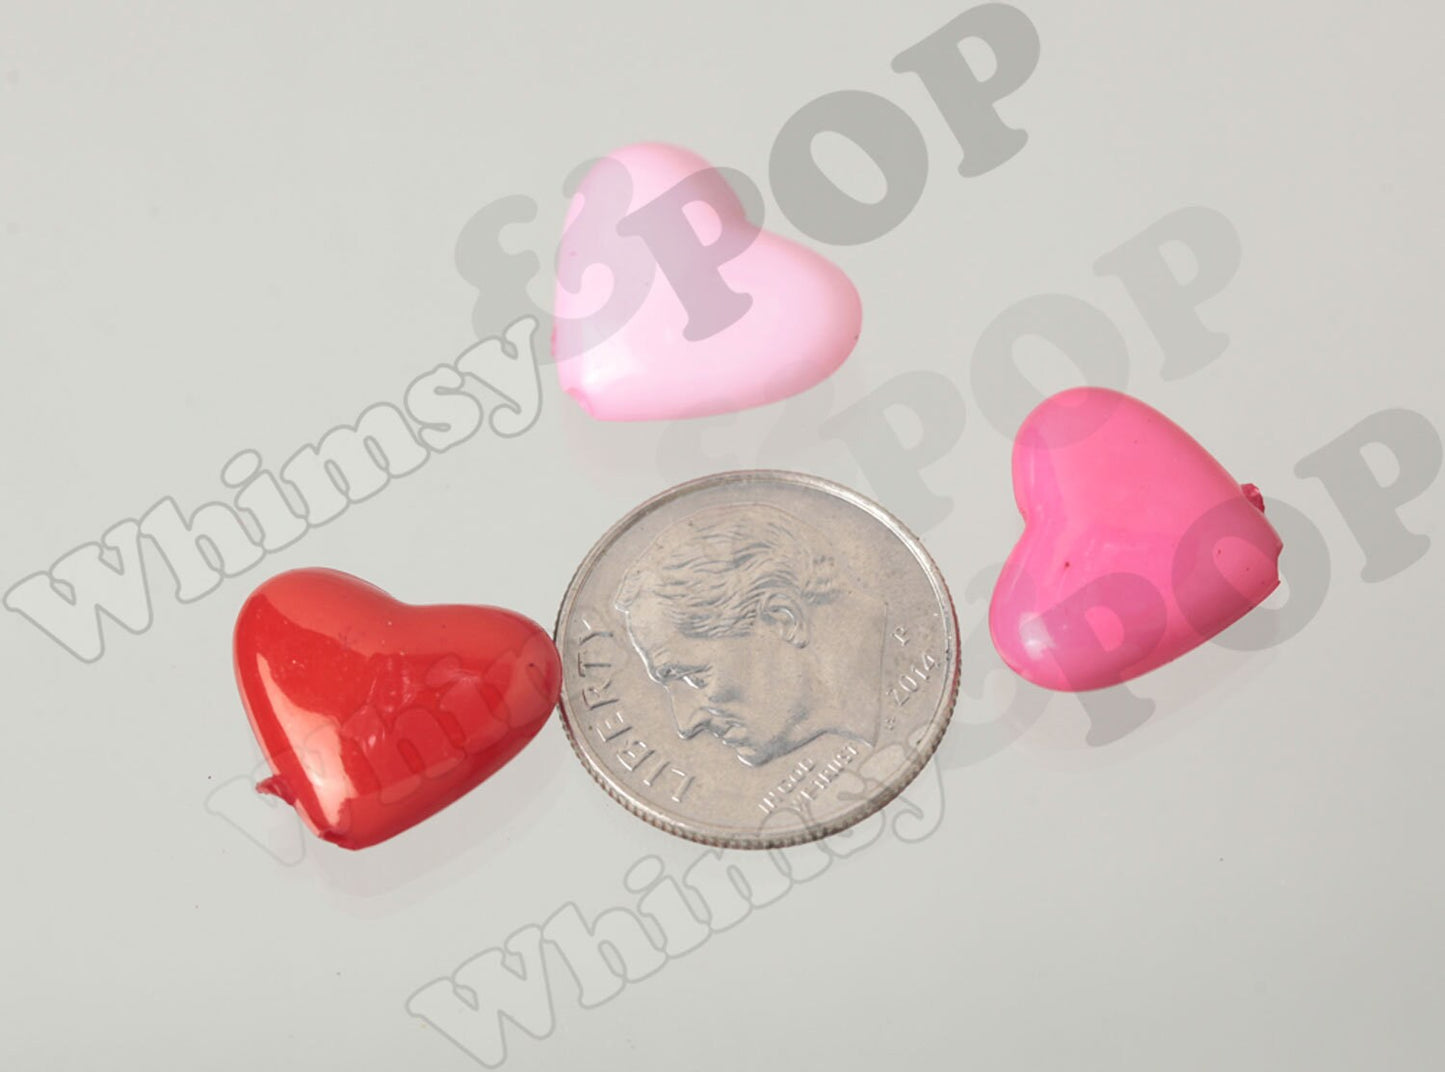 50 - Acrylic Heart Beads, Kawaii Heart Beads, Red Pink Heart Beads, Heart Spacer Beads, Heart Beads, 14.5mm x 12mm , Hole:1.5mm (R5-034)